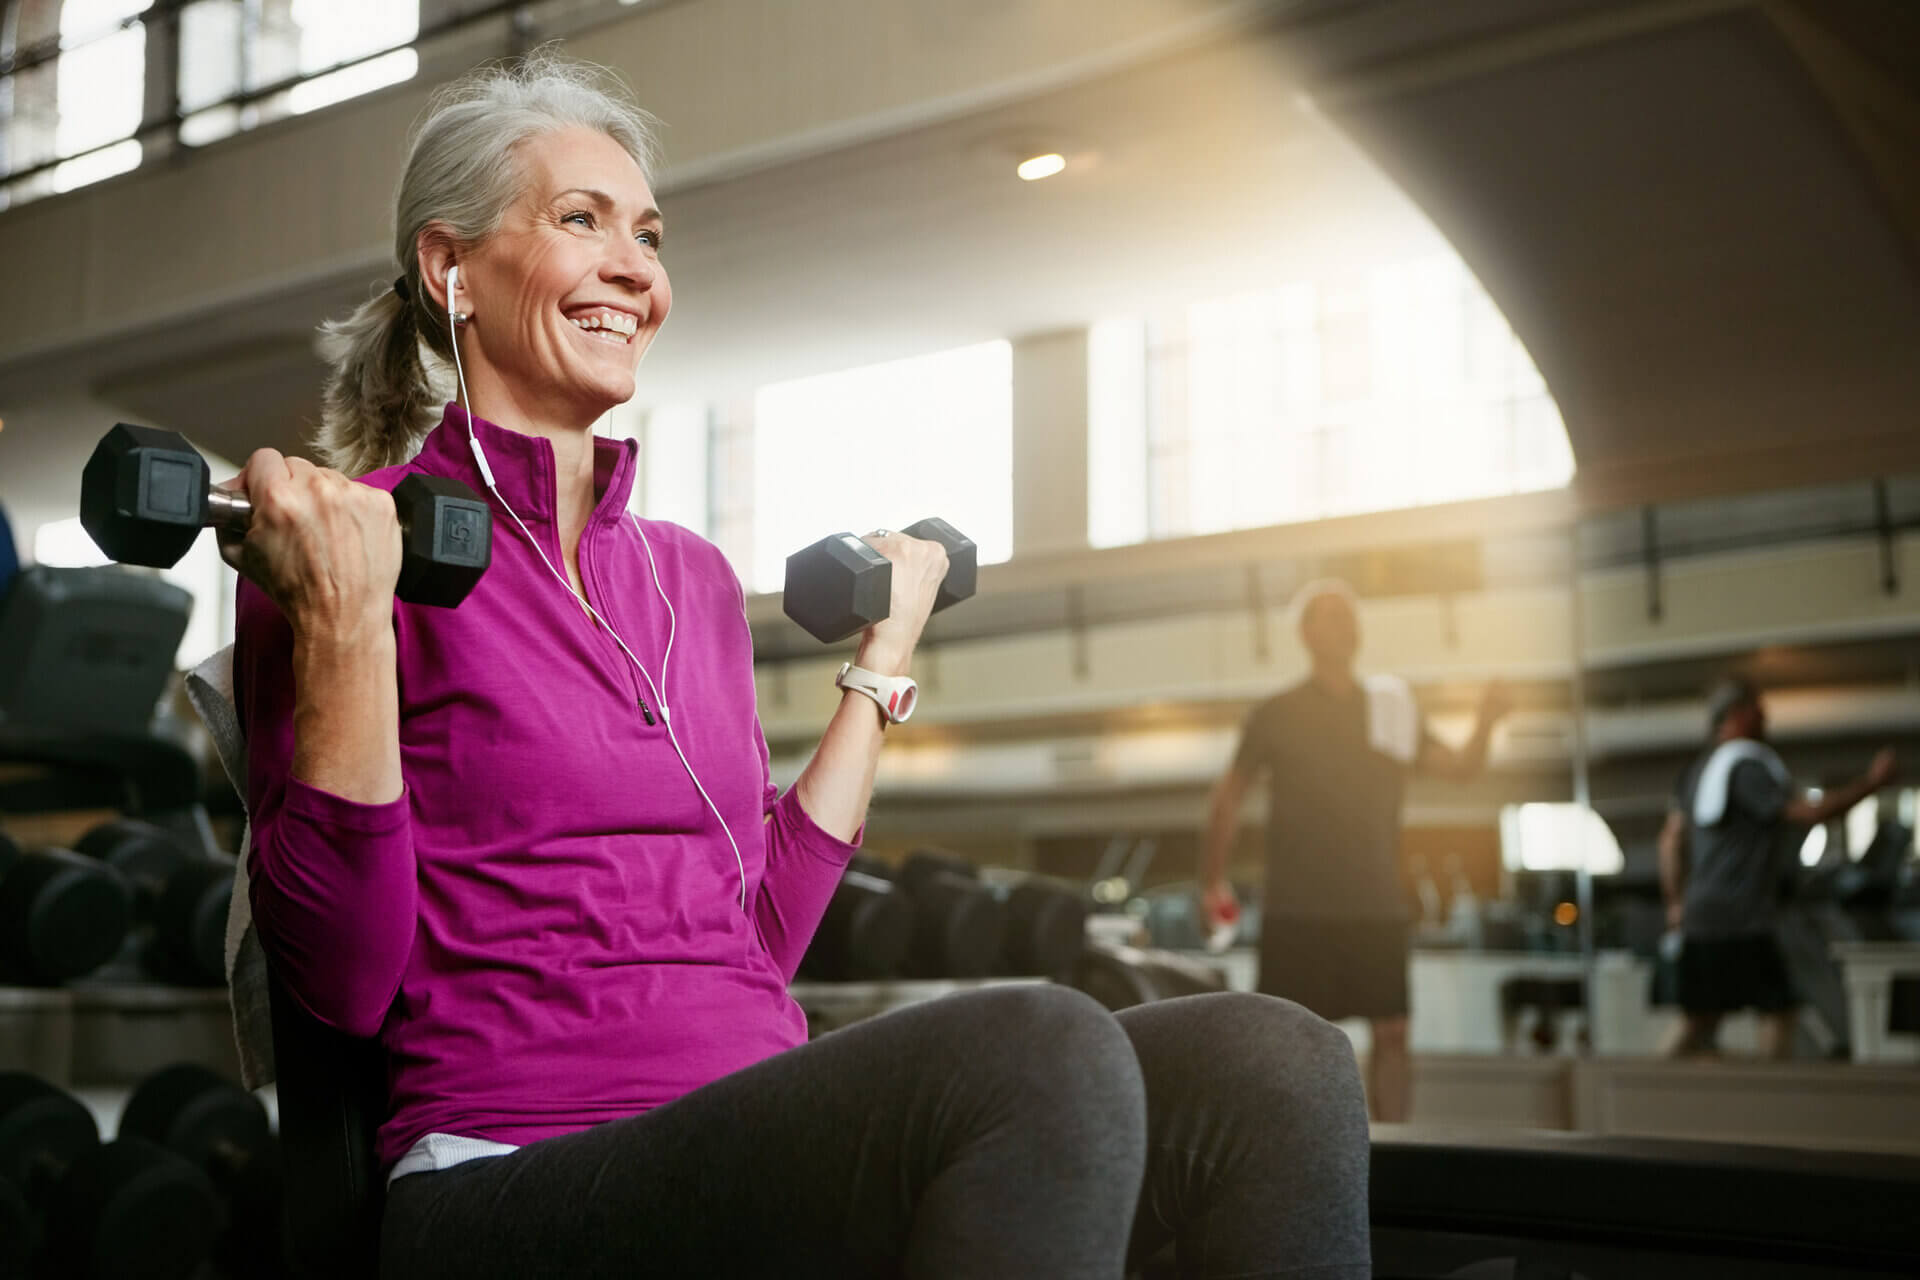 Older lady joyfully lifting weights in a gym